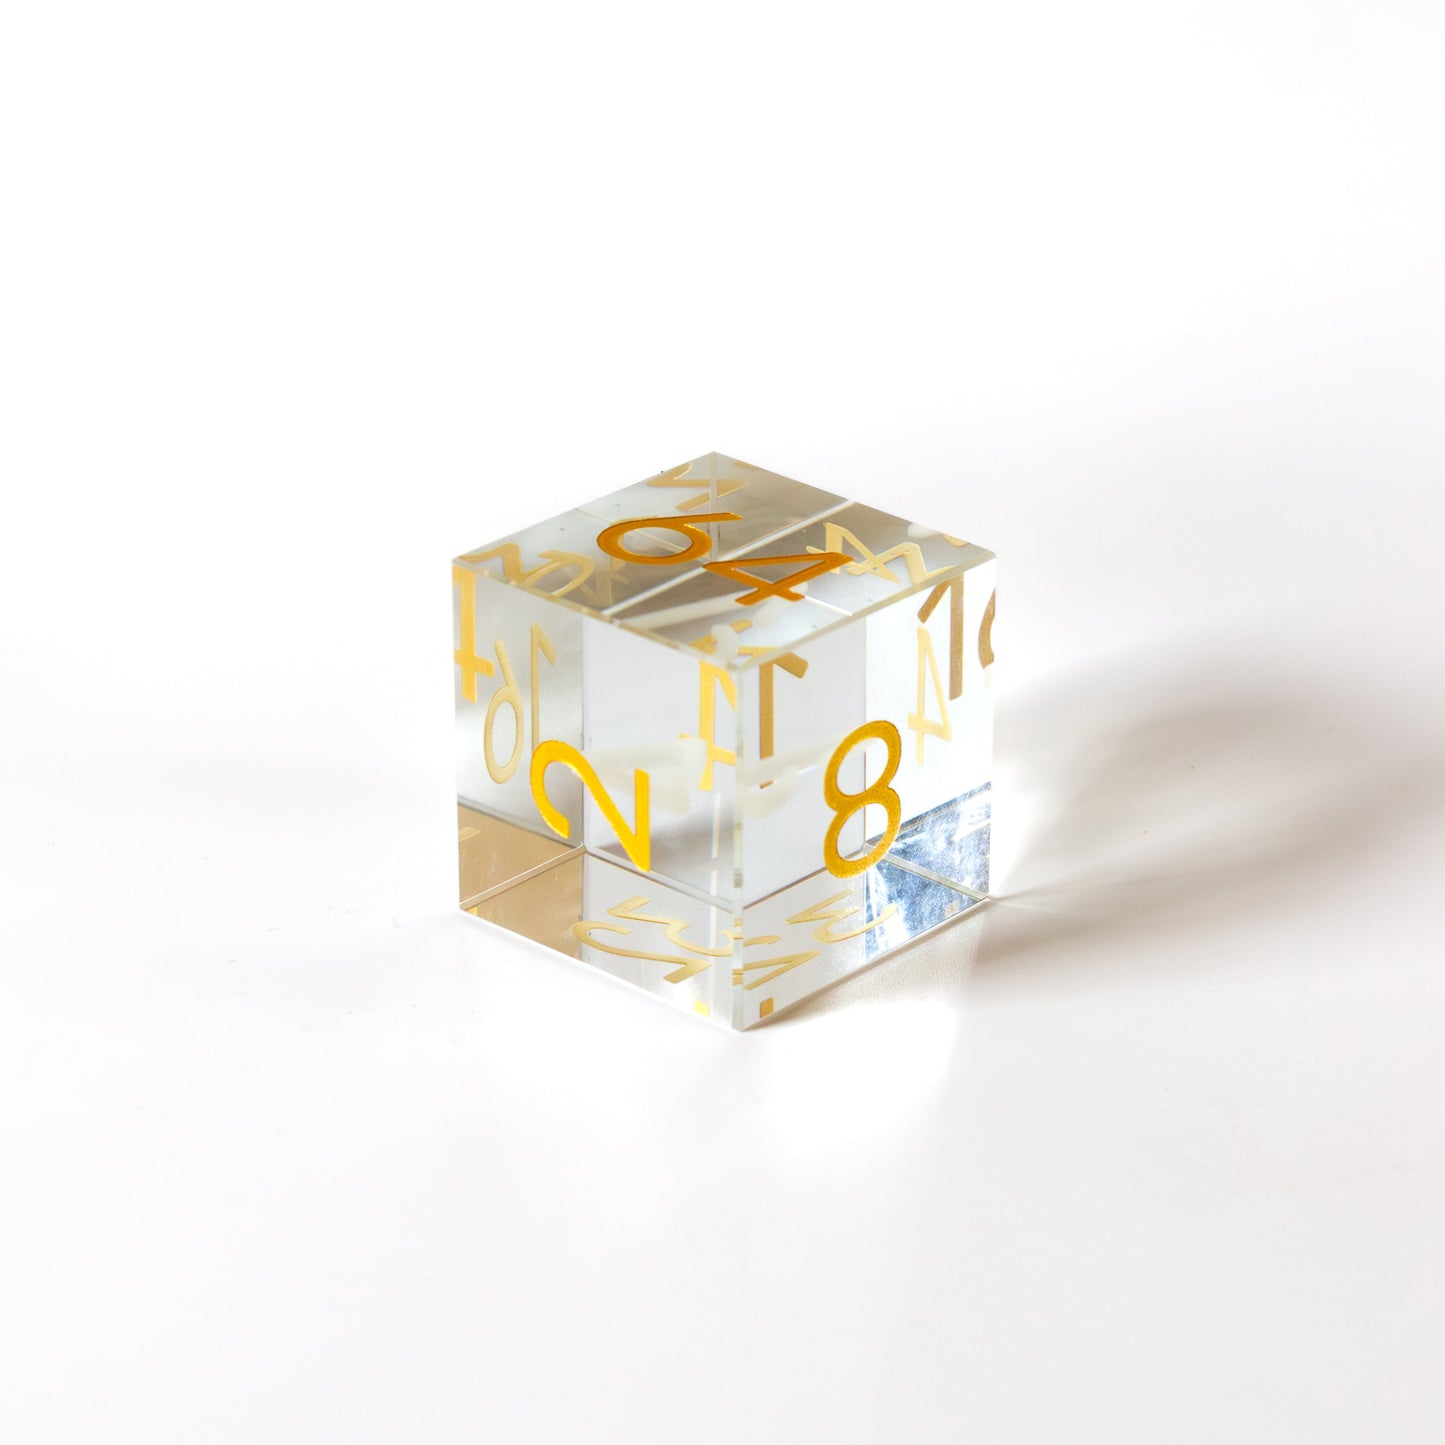 Cosmos Cubes, Backgammon Doubling Cube, 38mm/1.5in, 160 grams/5.6oz, Handmade Luxury Backgammon Accessory